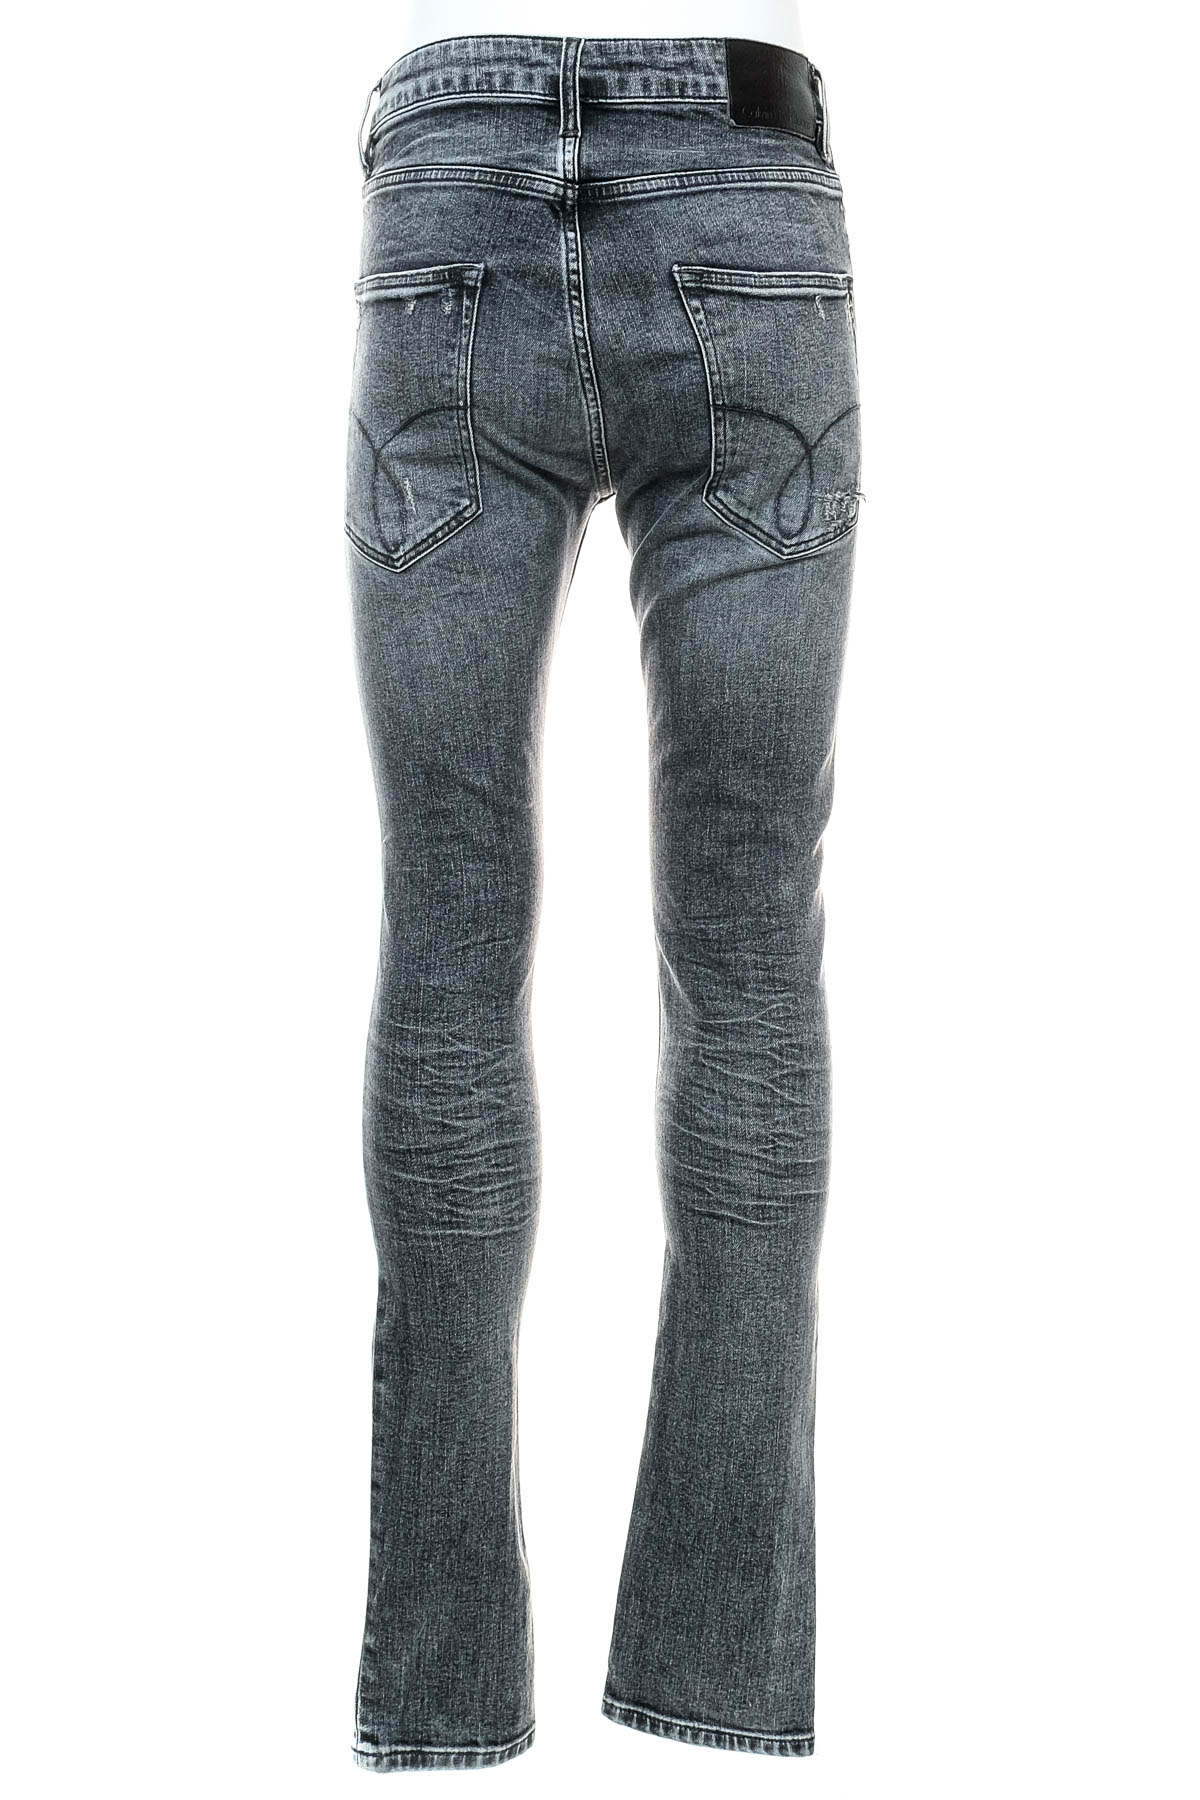 Men's jeans - Calvin Klein Jeans - 1